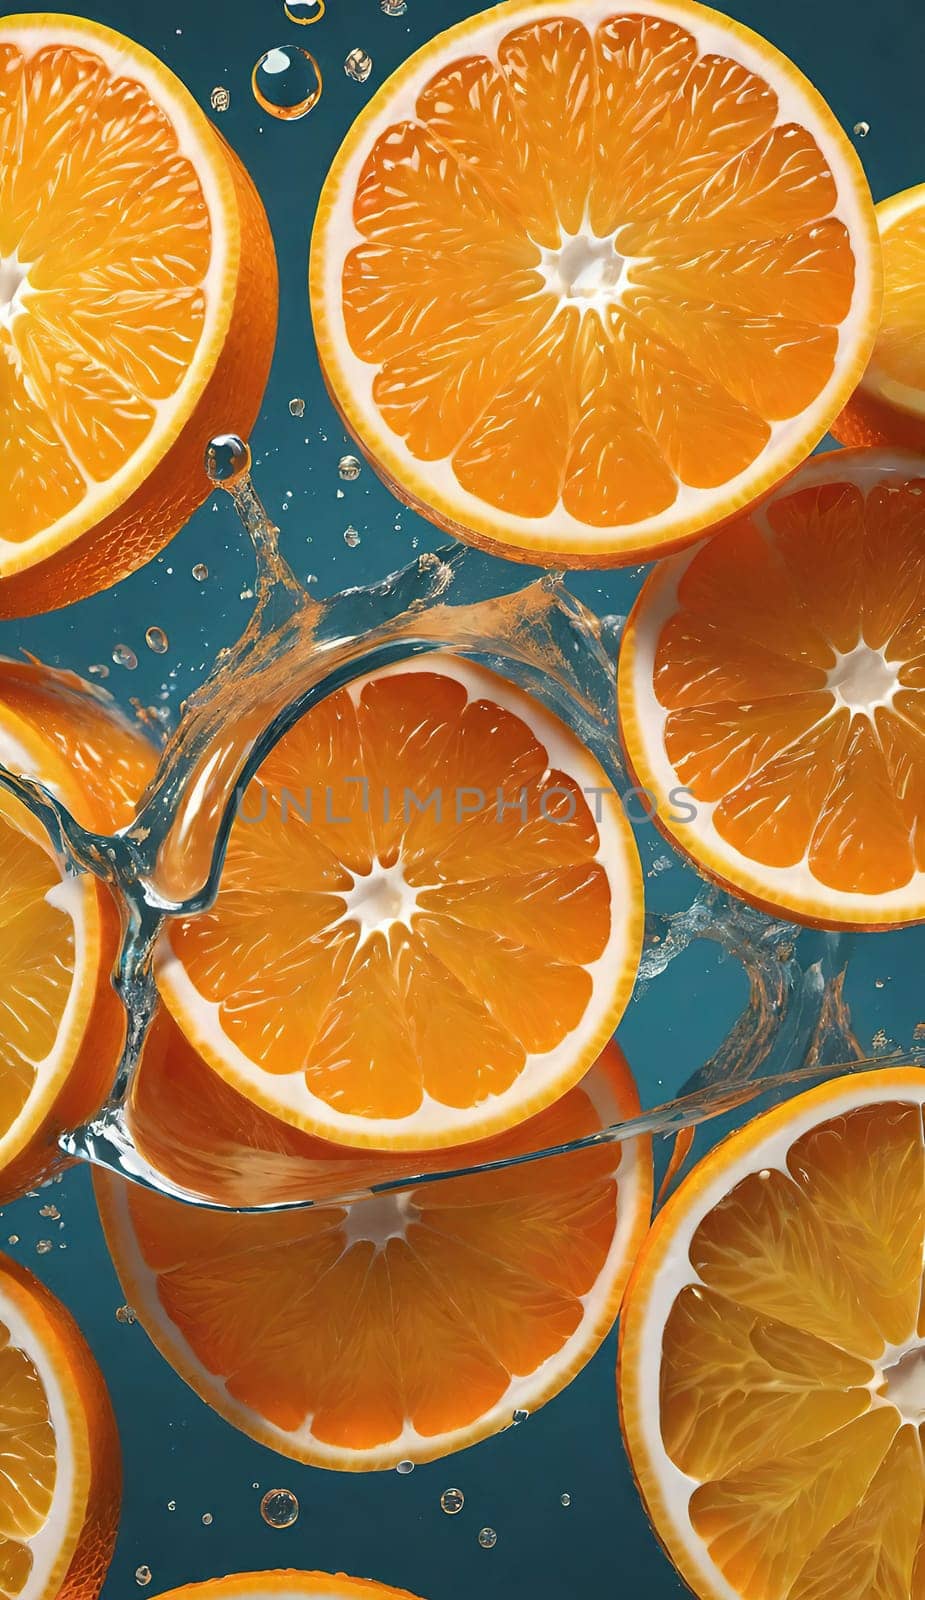 Fresh orange falling into water with splash on background, by yilmazsavaskandag